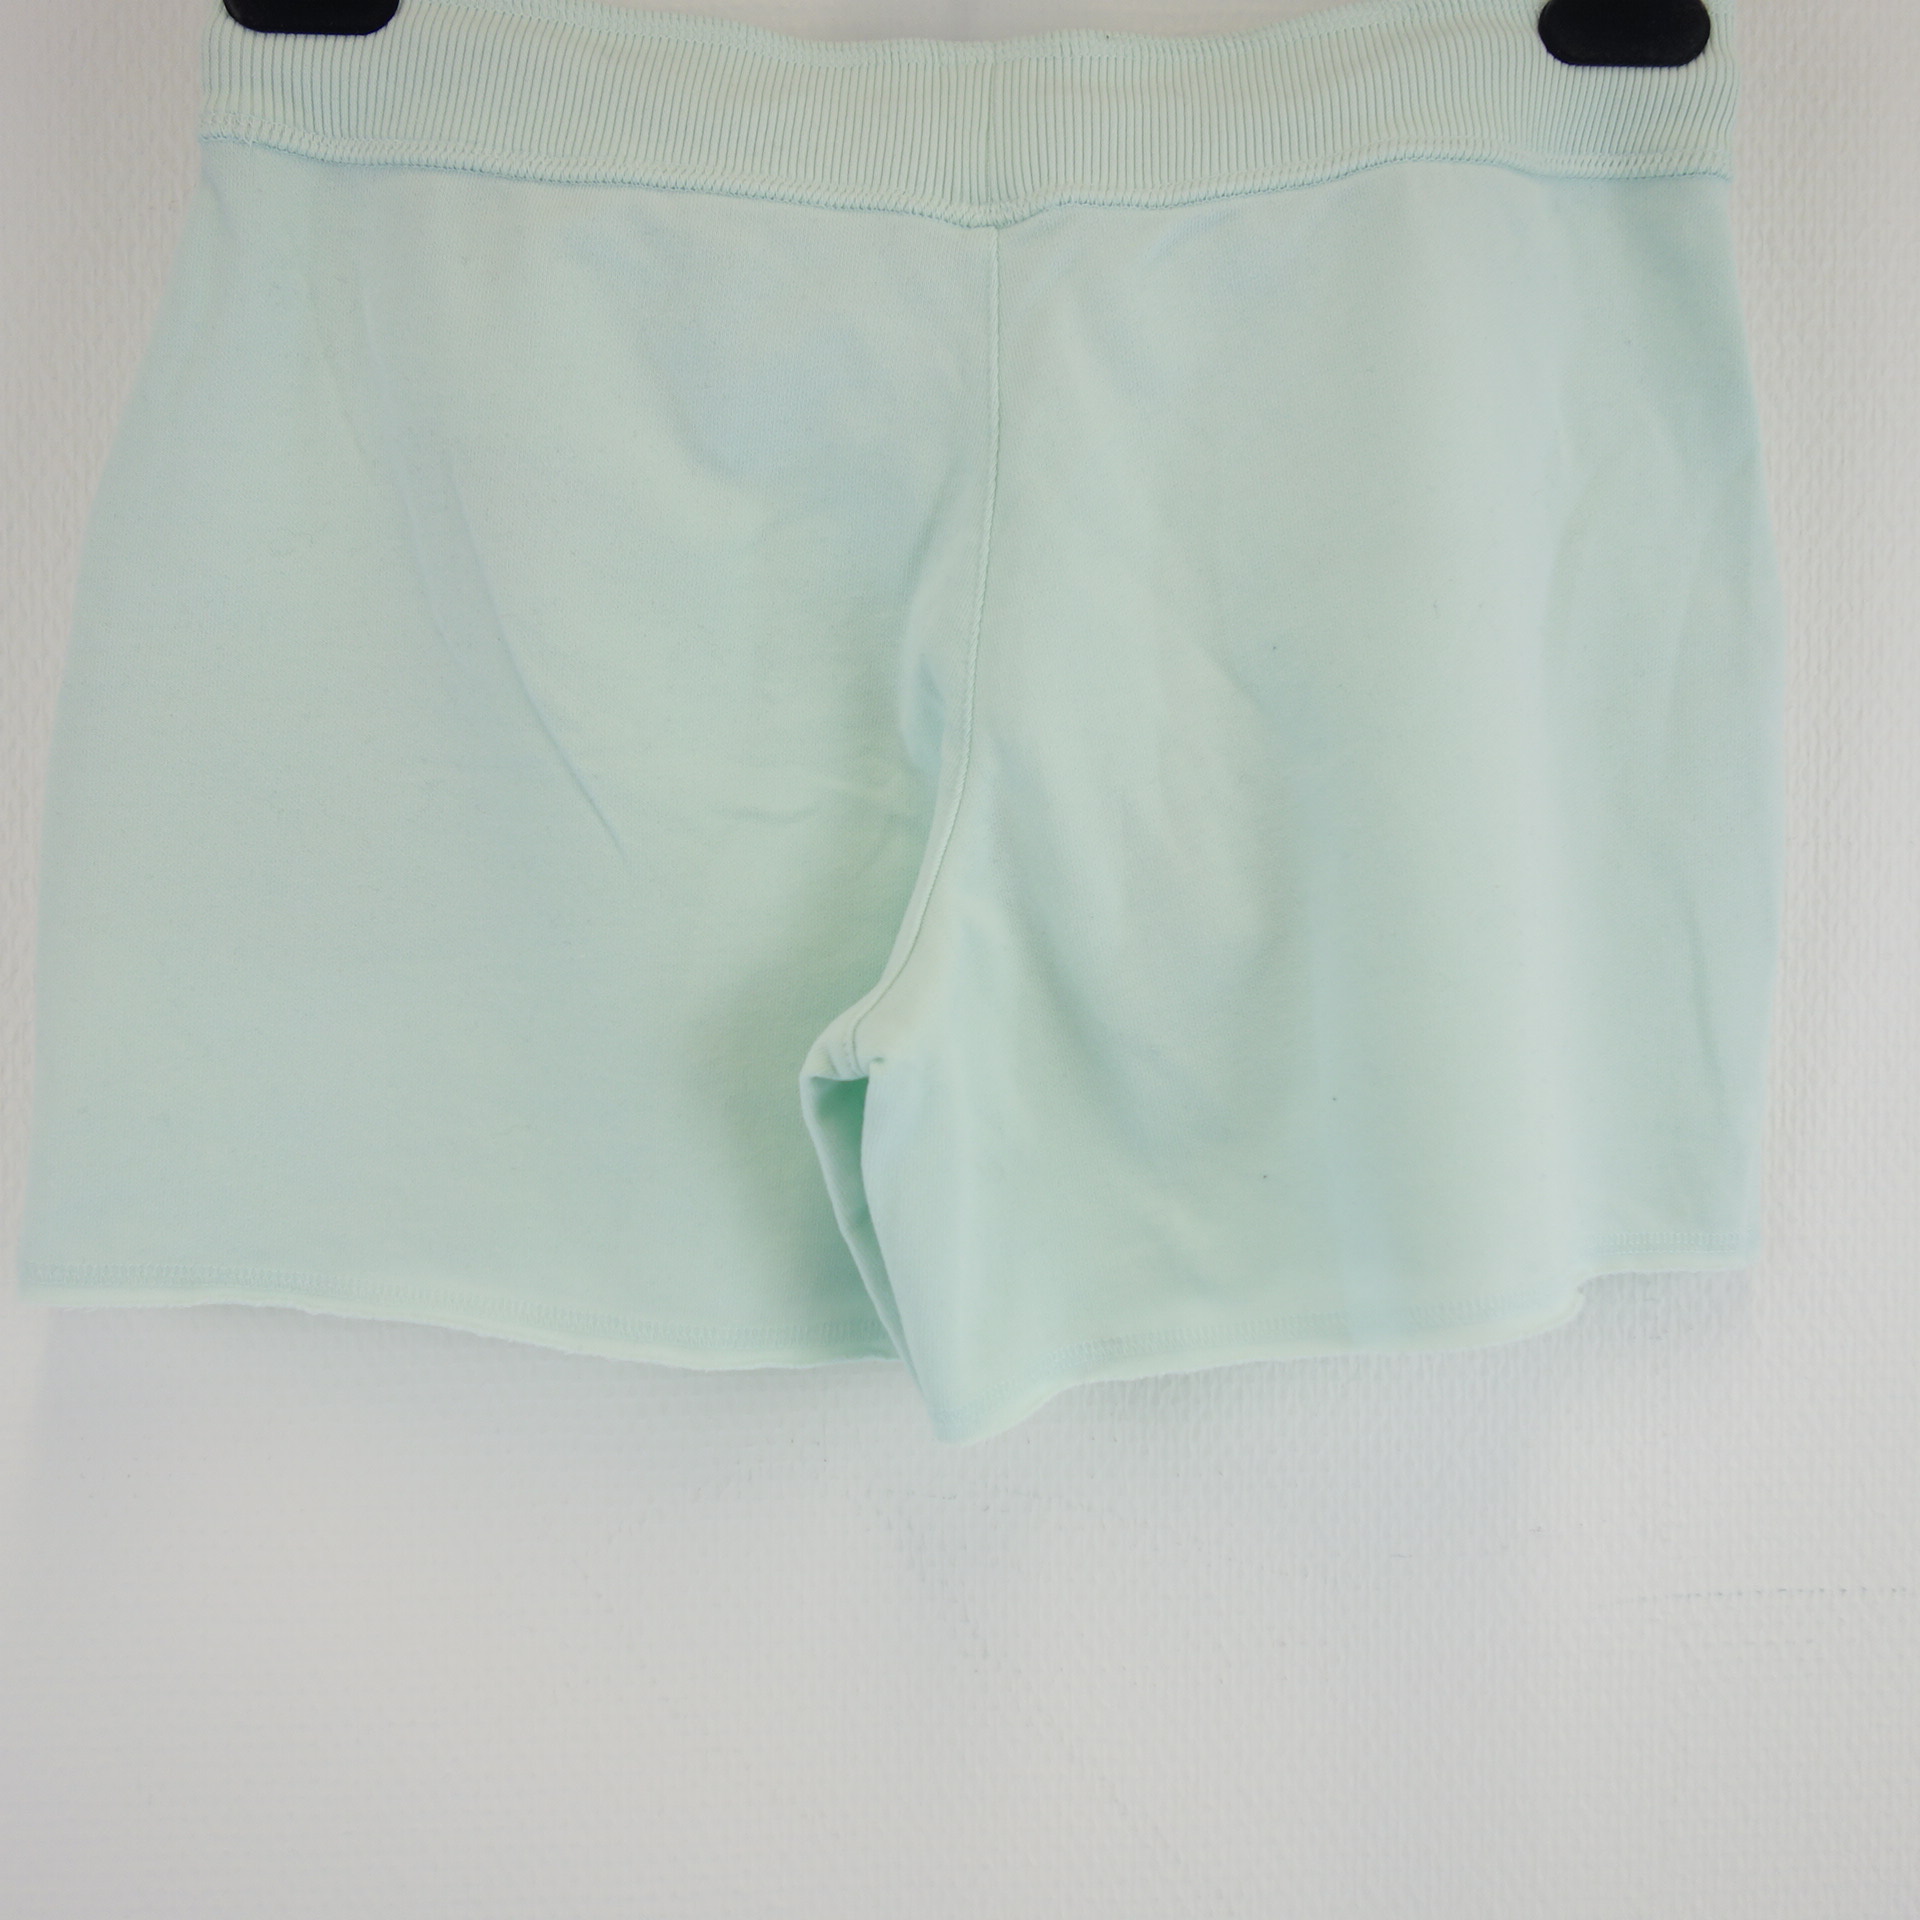 JUVIA Kurze Damen Hose Shorts Sweat Jersey Bermuda Mint Grün Größe M